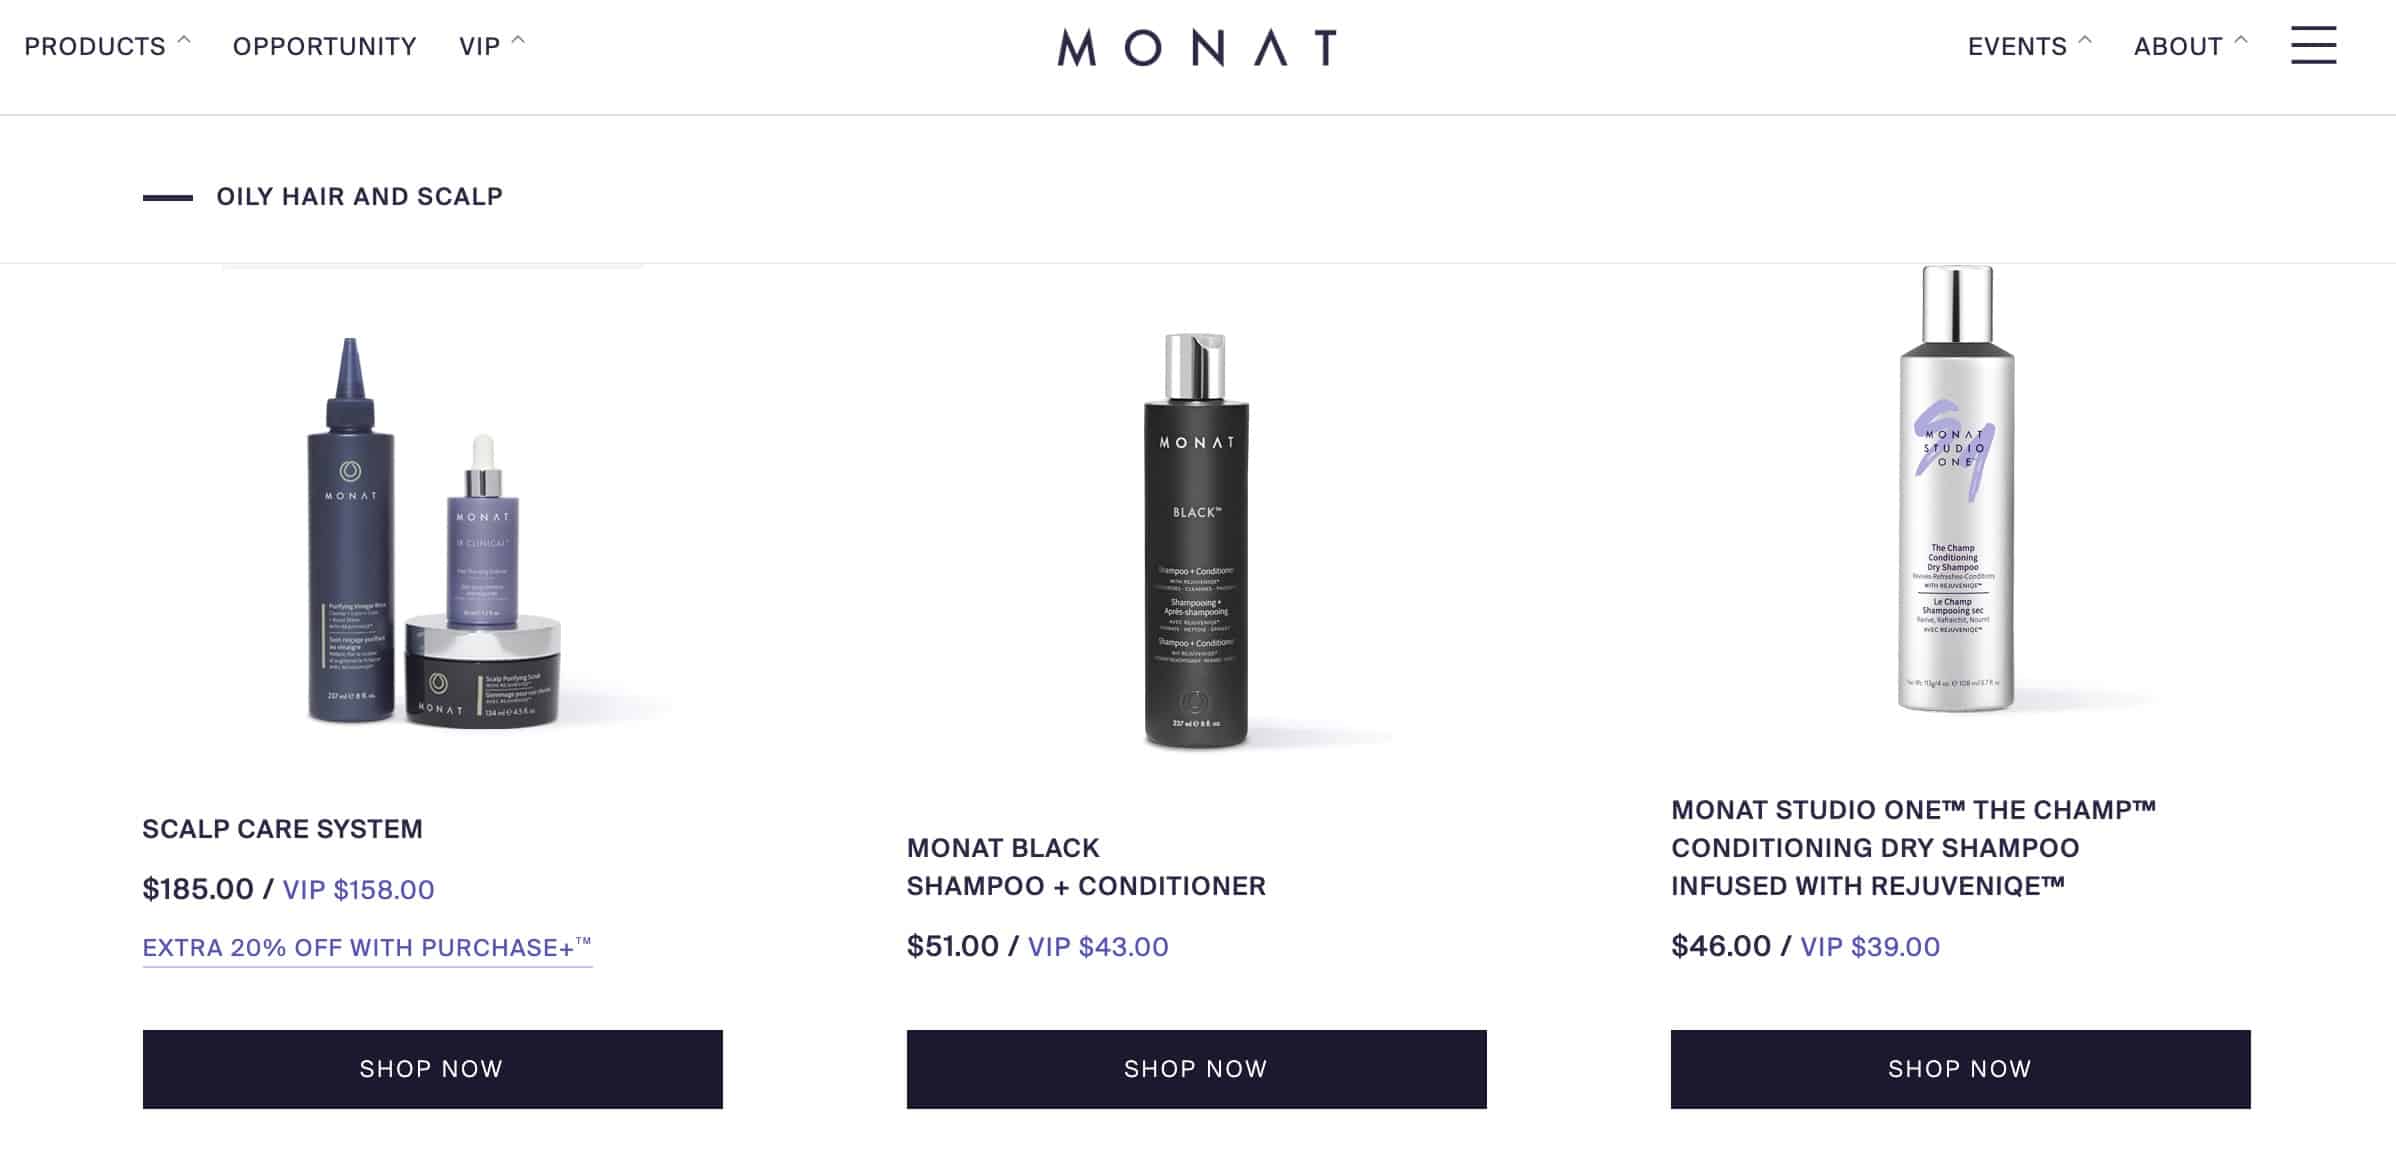 Monat Products